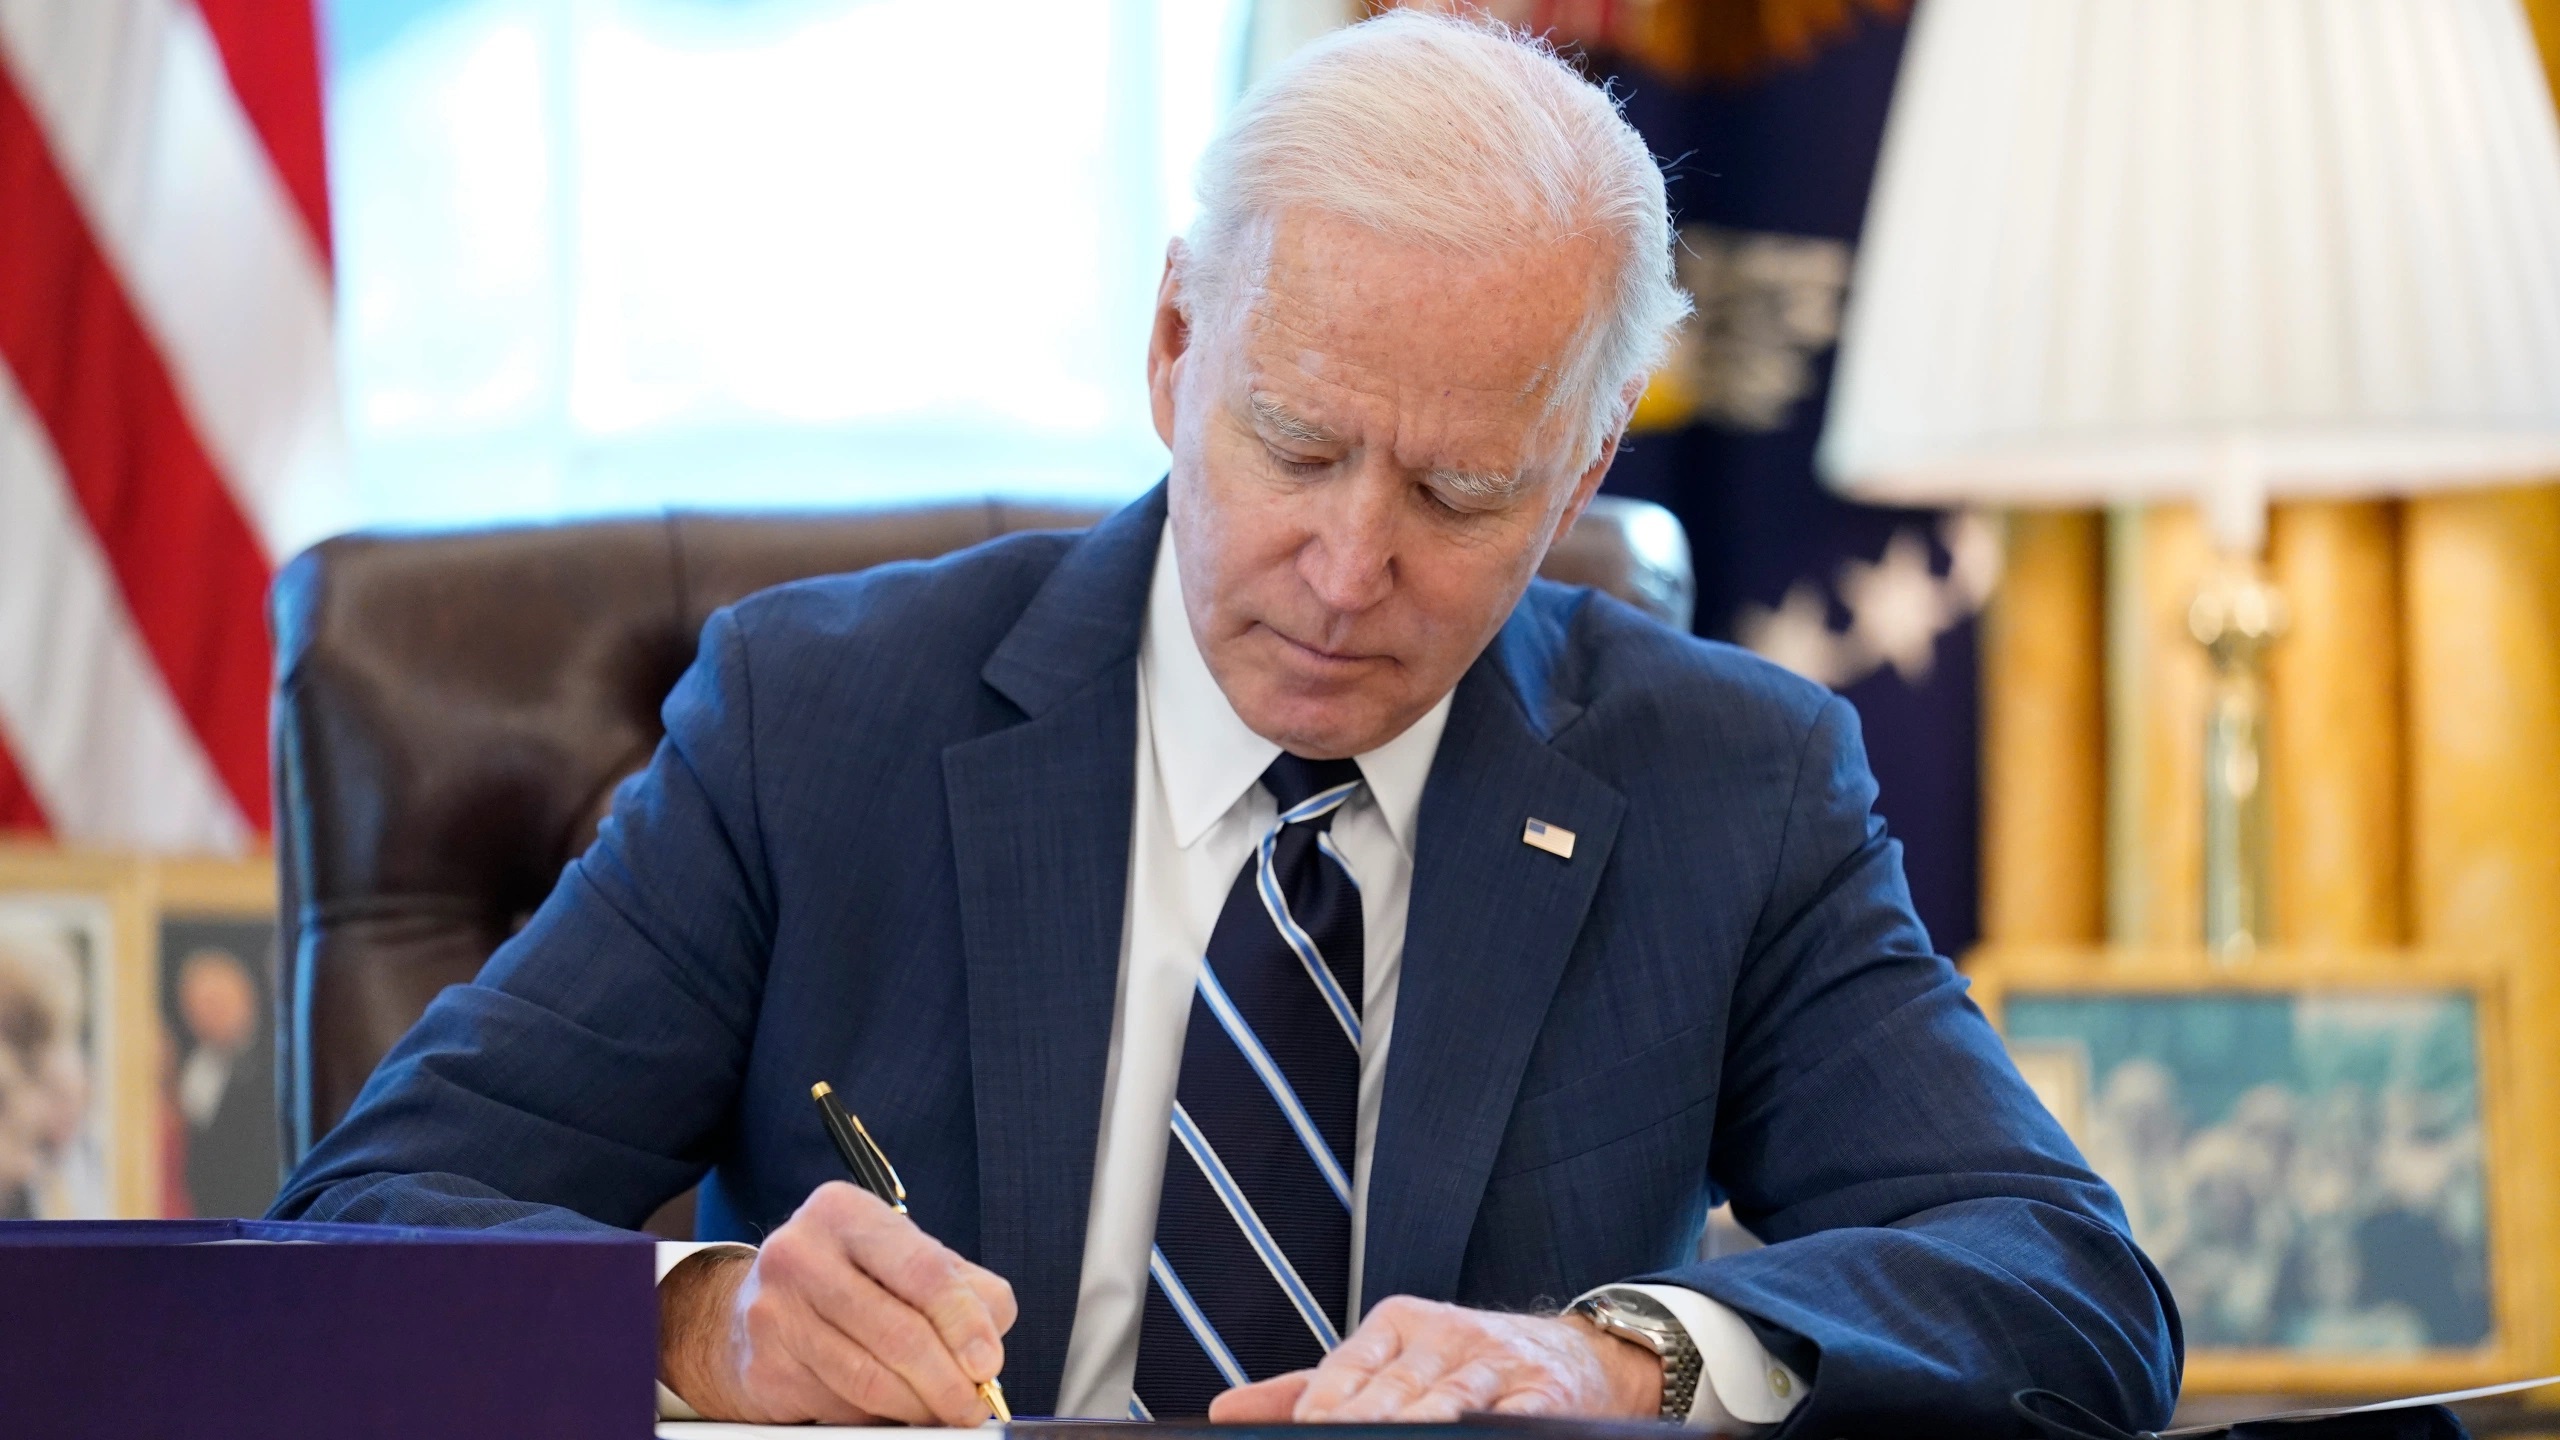 Biden signed a $ 1.9 trillion stimulus package